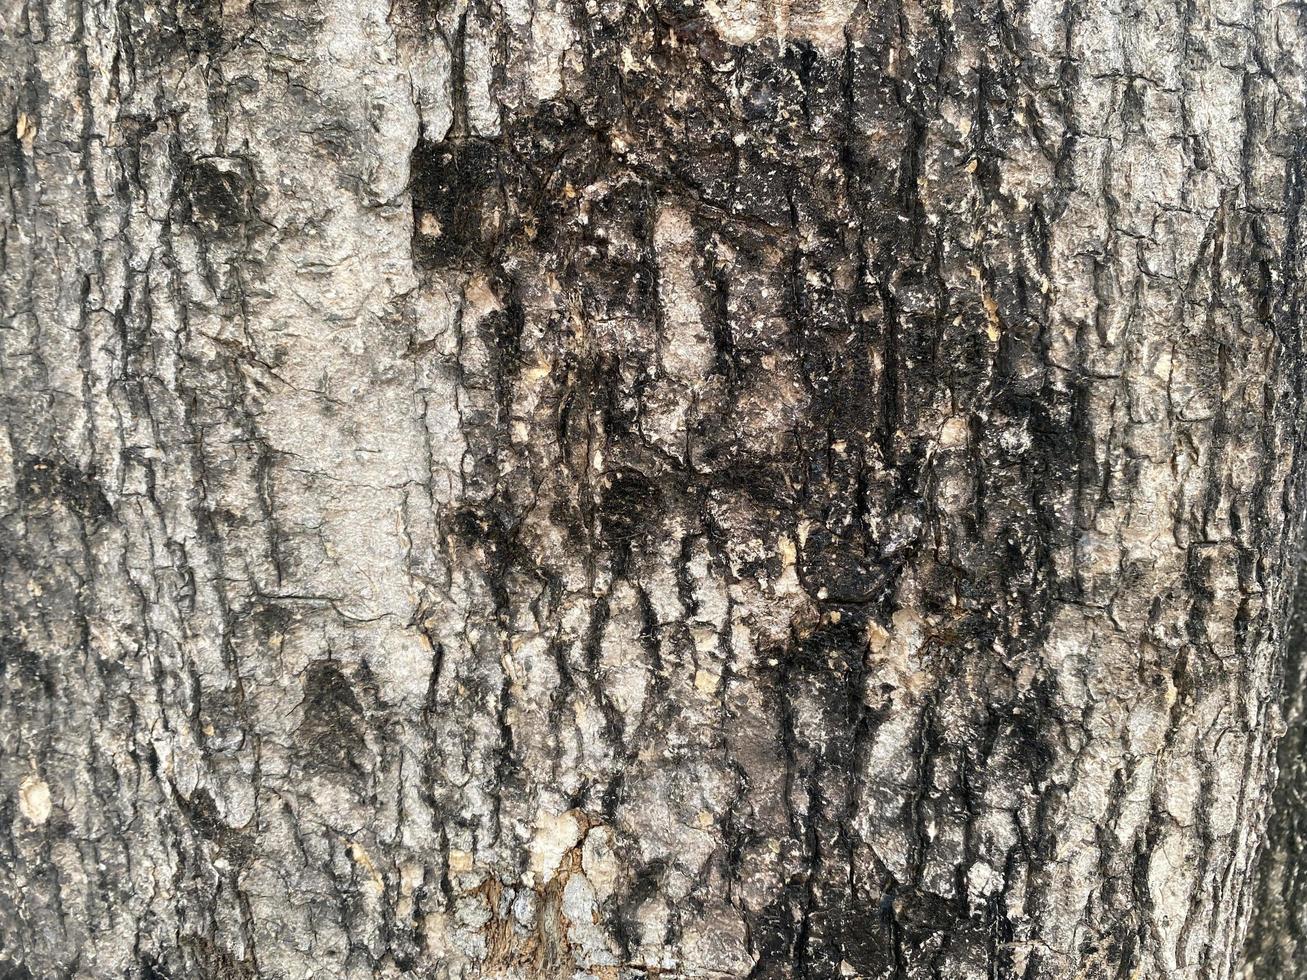 Old wooden tree texture photo